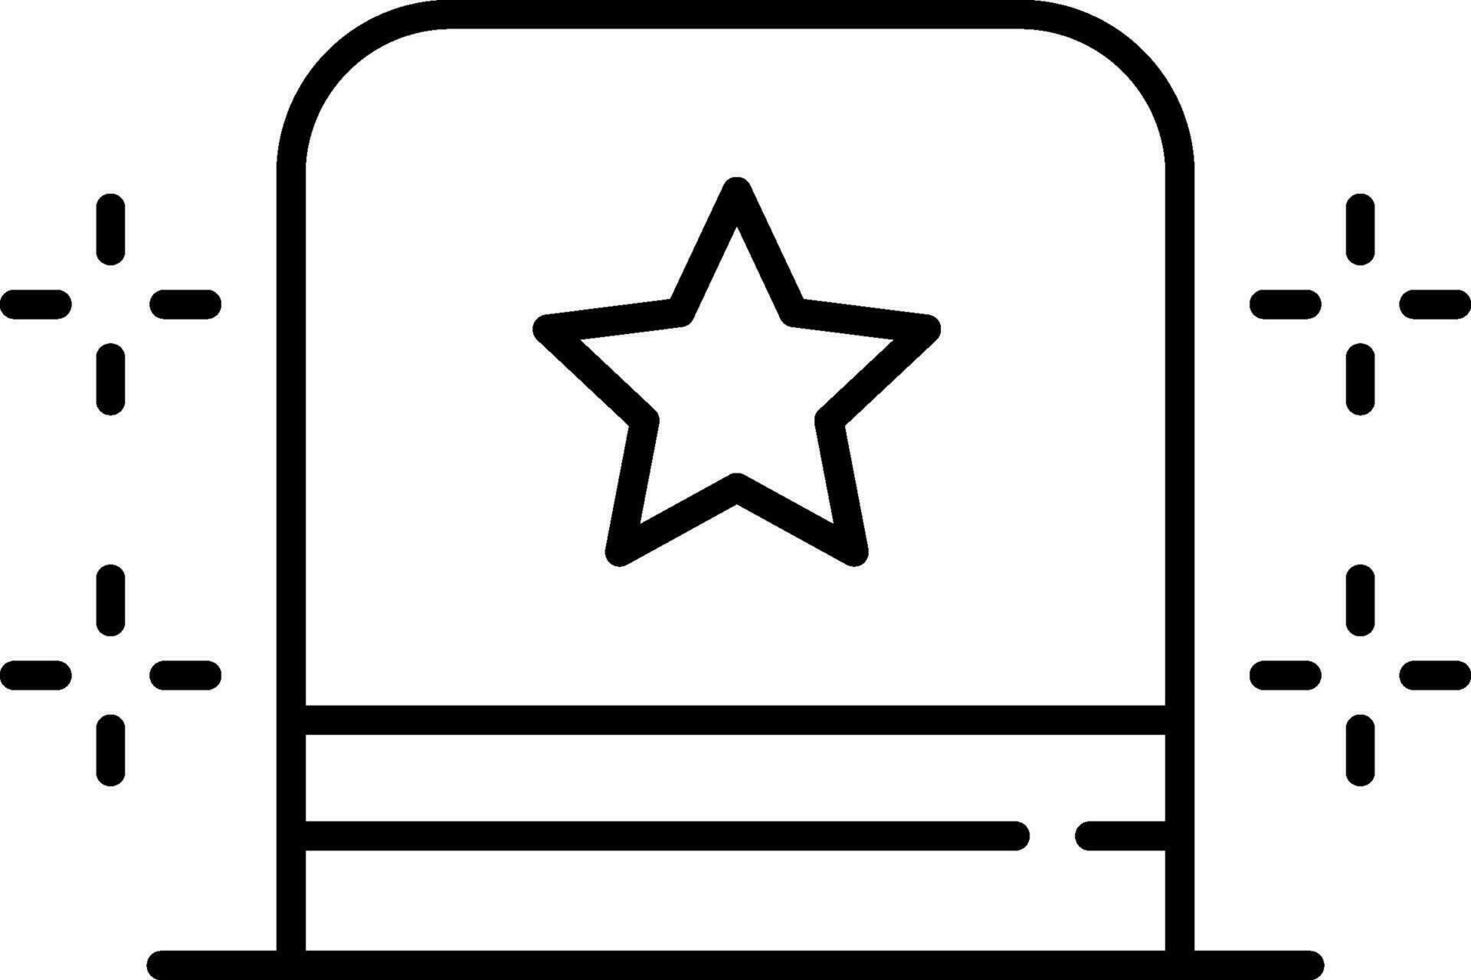 Magician Hat Line Icon vector